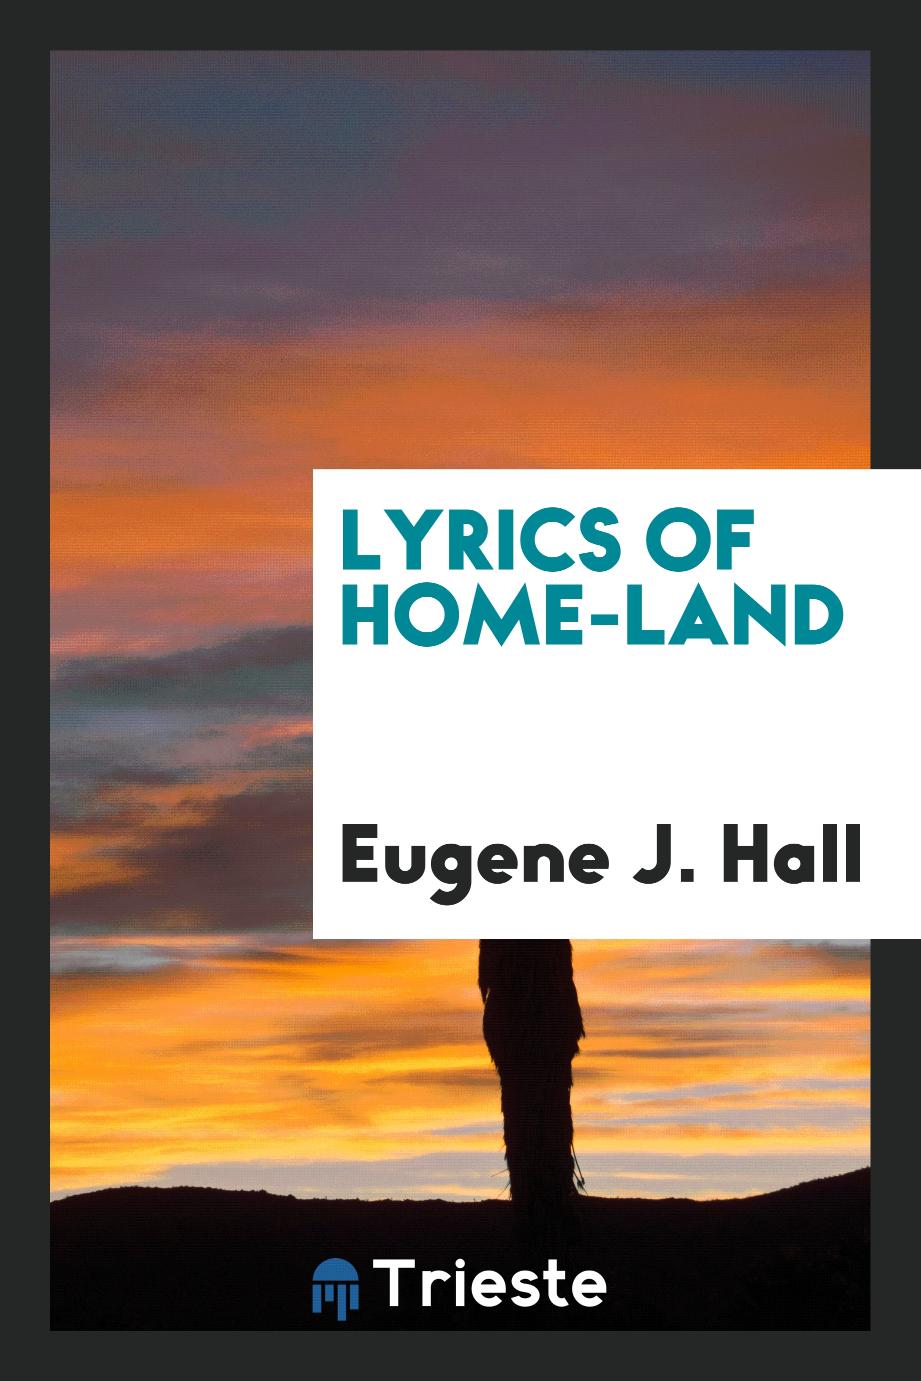 Lyrics of Home-Land